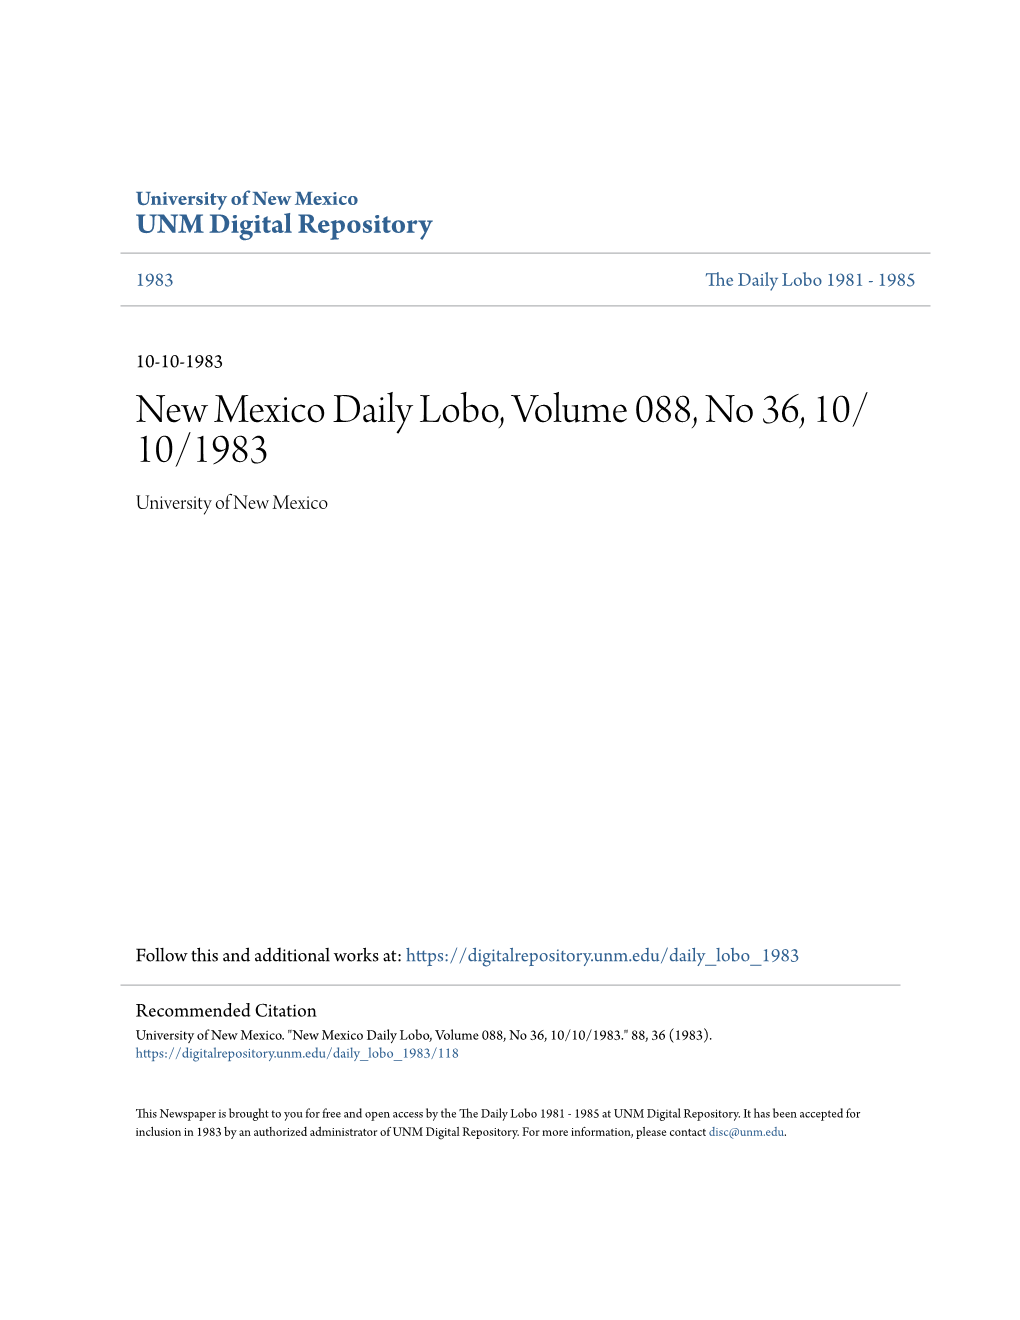 New Mexico Daily Lobo, Volume 088, No 36, 10/10/1983." 88, 36 (1983)